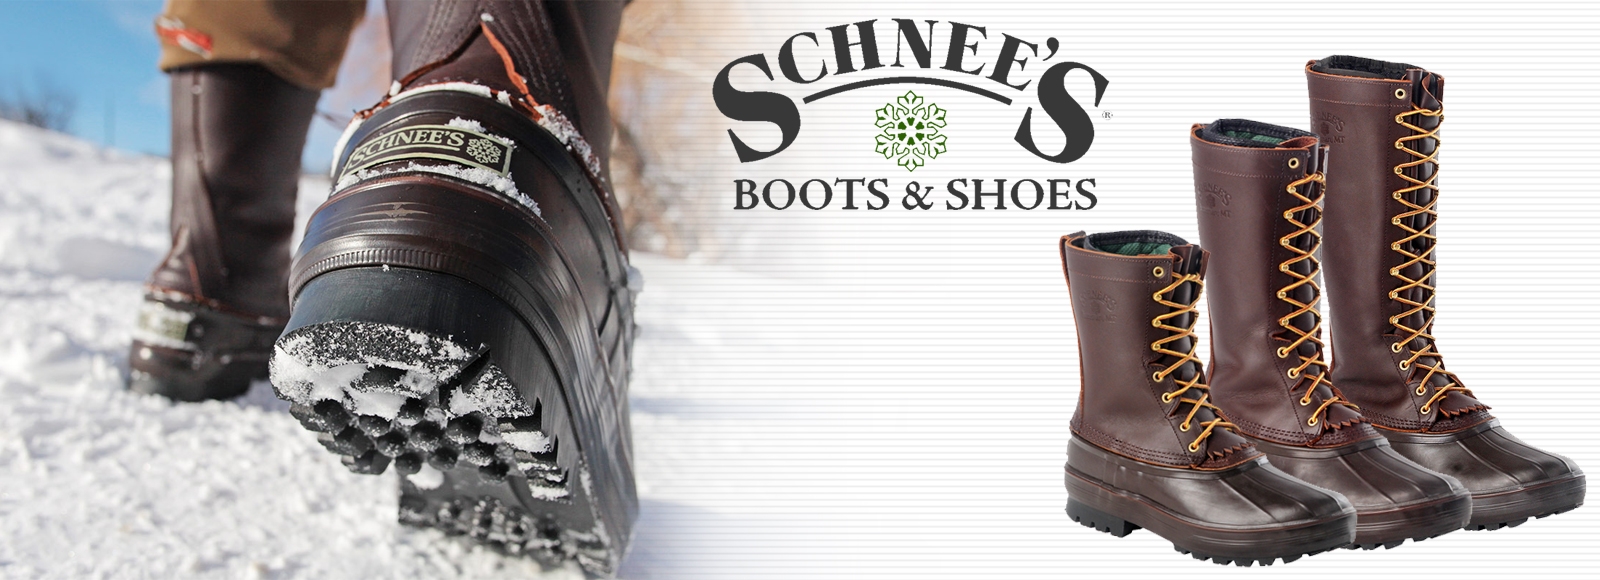 schnee's pac boots